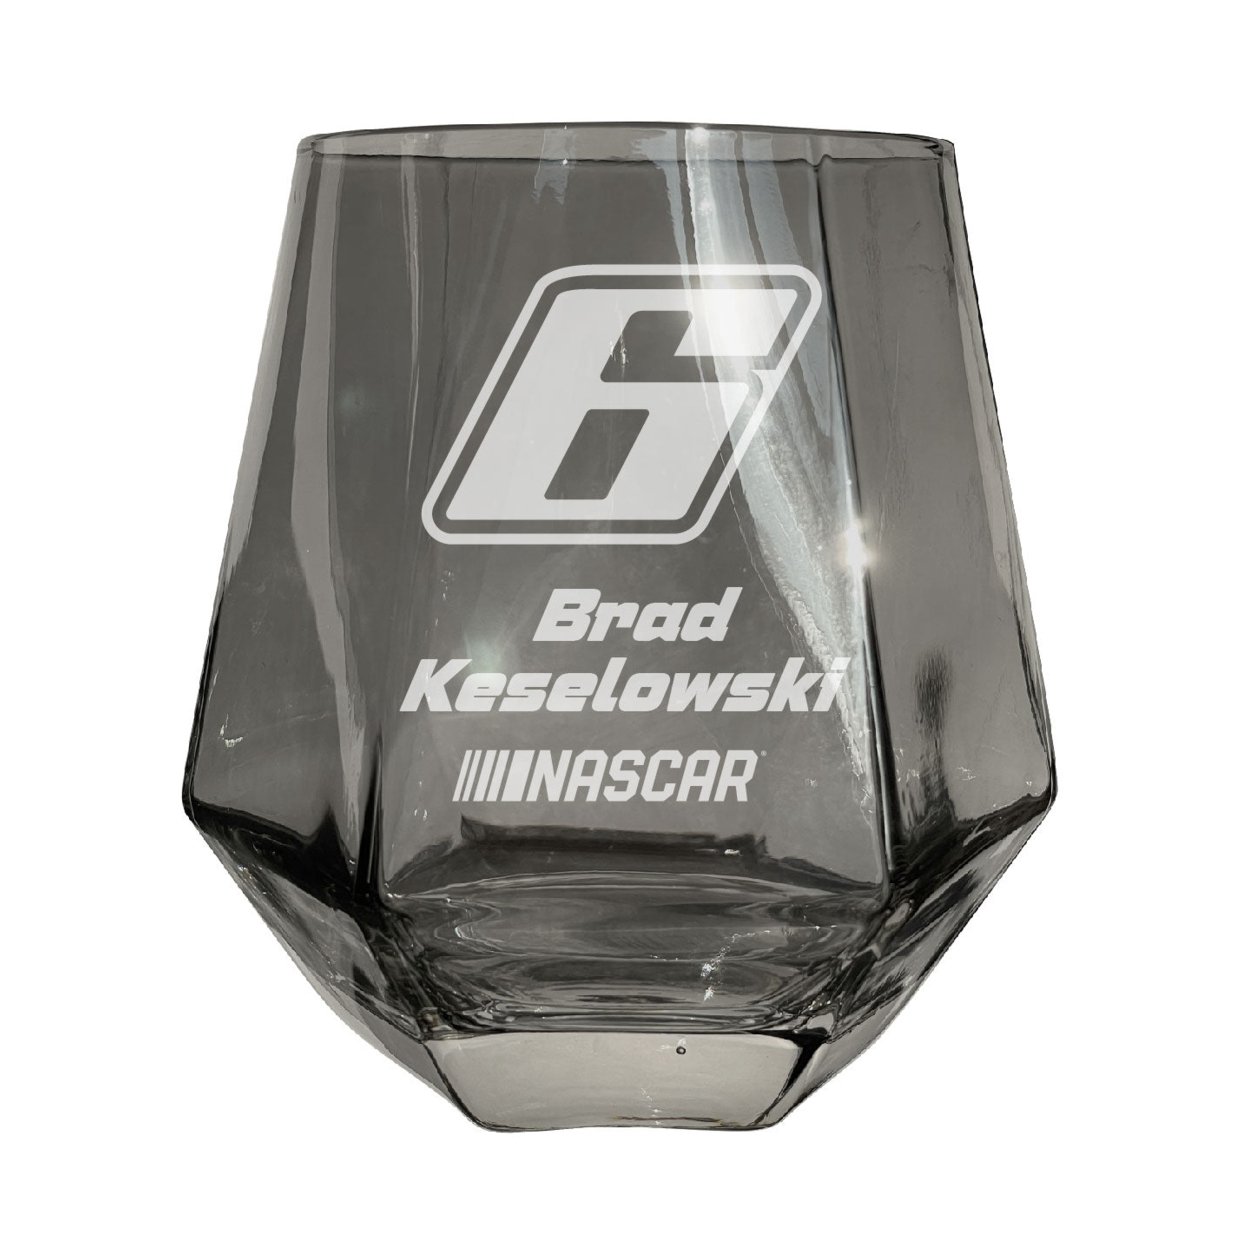 #6 Brad Keselowski Officially Licensed 10 Oz Engraved Diamond Wine Glass - Clear, Single